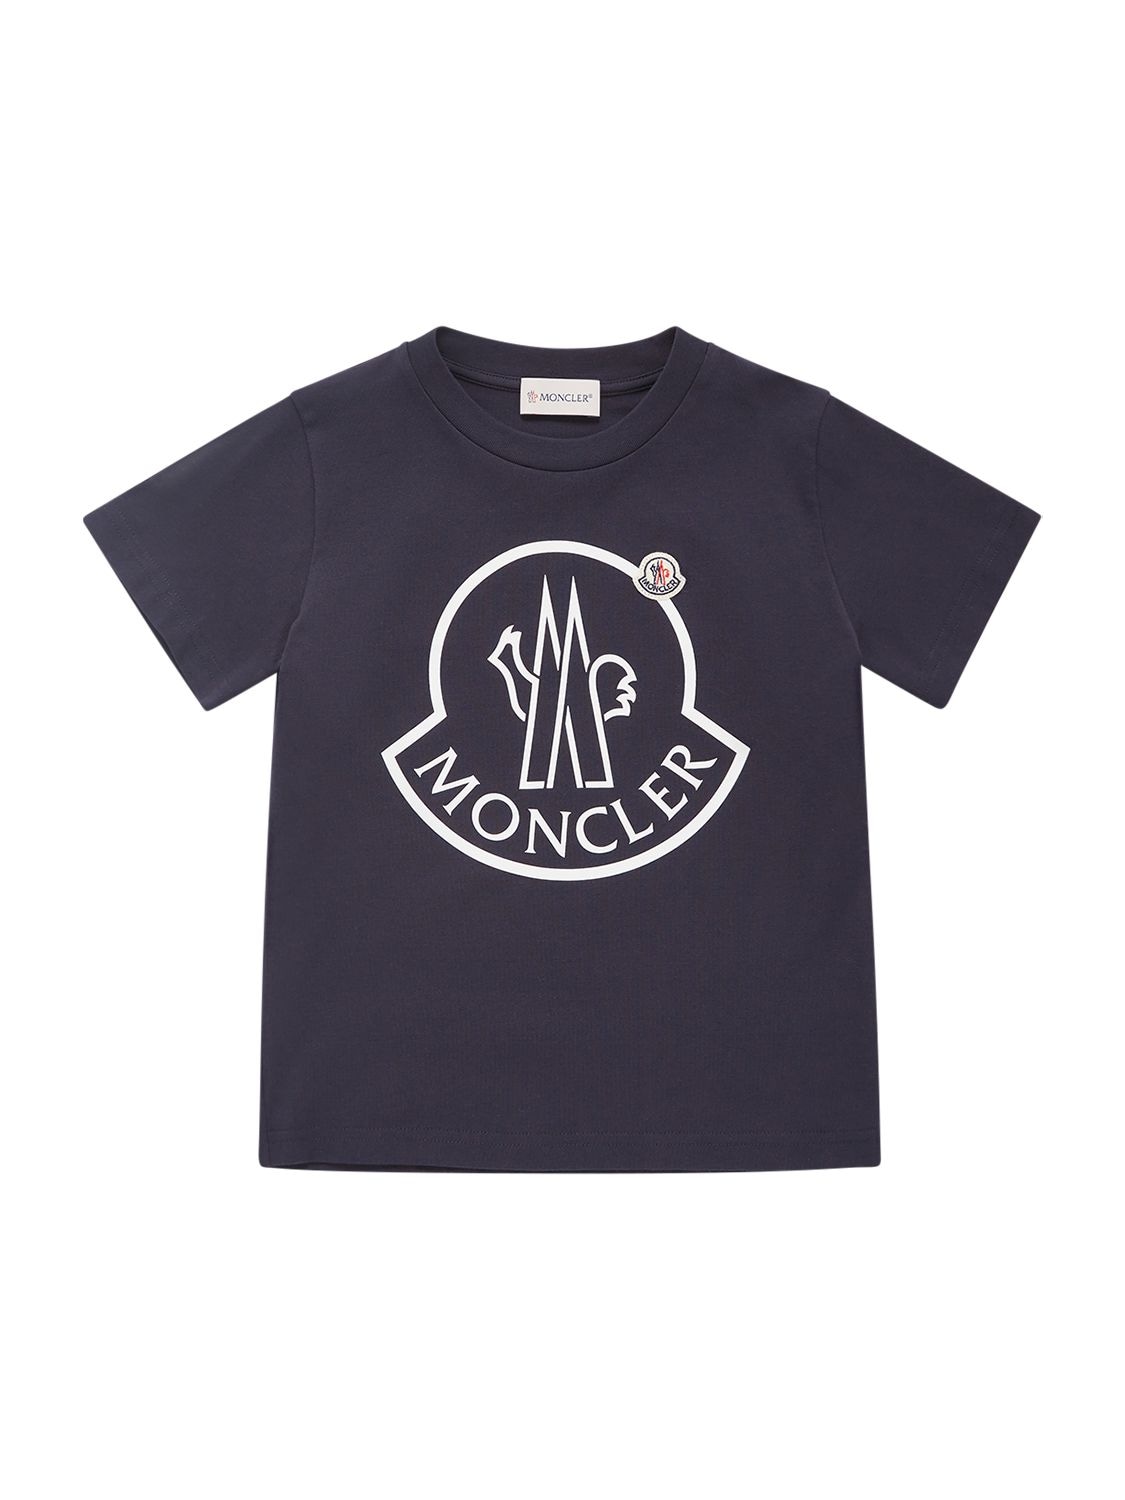 Moncler Kids' Cotton Jersey T-shirt In Navy